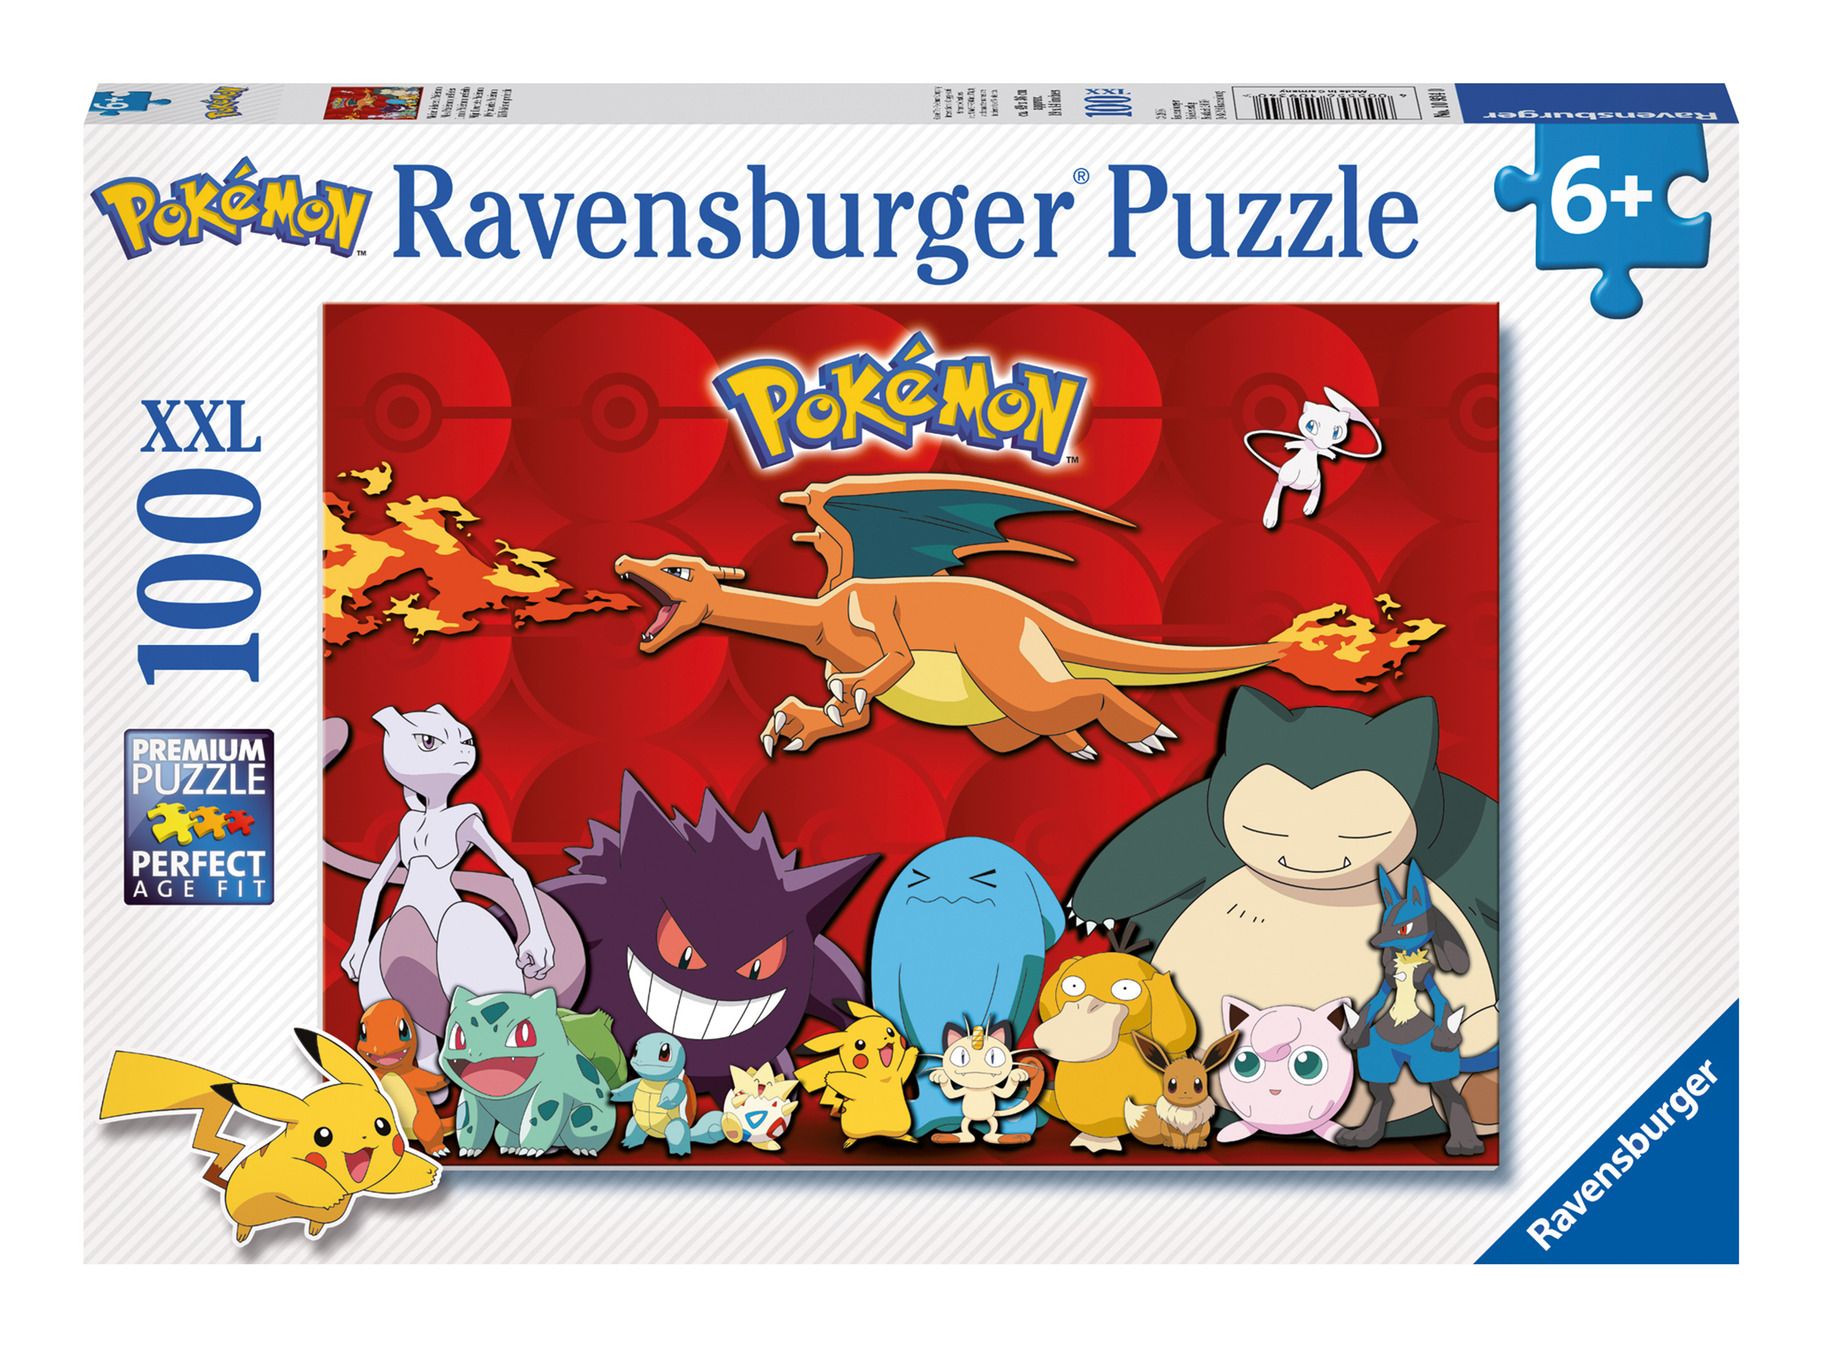 Ravensburger Pokemon XXL 100 Piece Jigsaw Puzzle Ravensburger